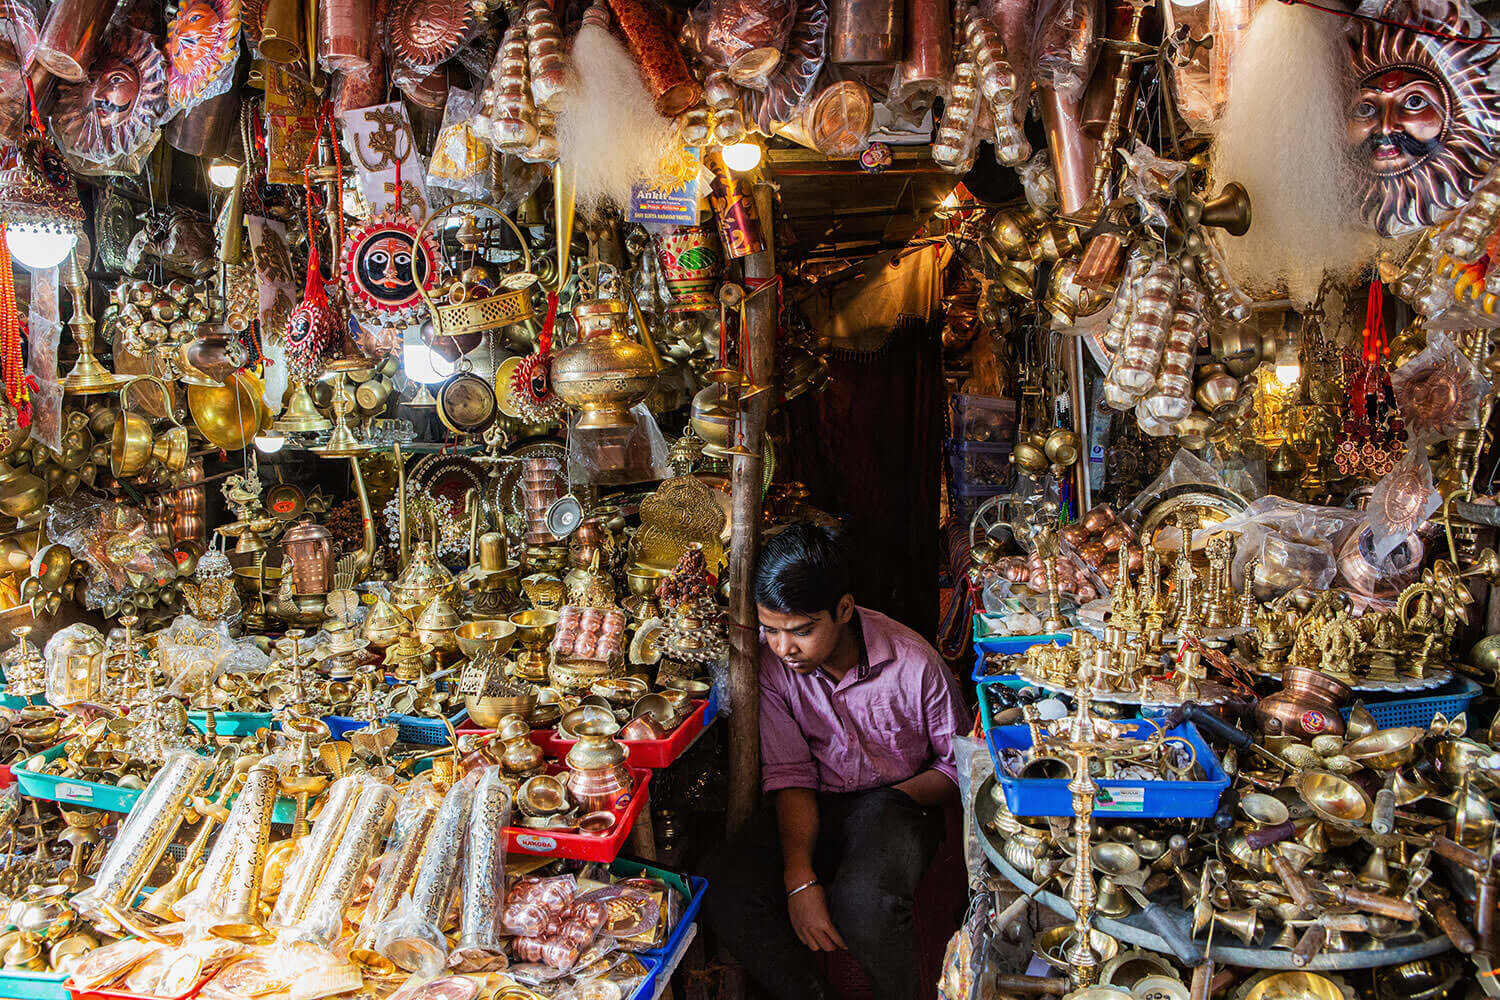 A scene from a Varanasi market 